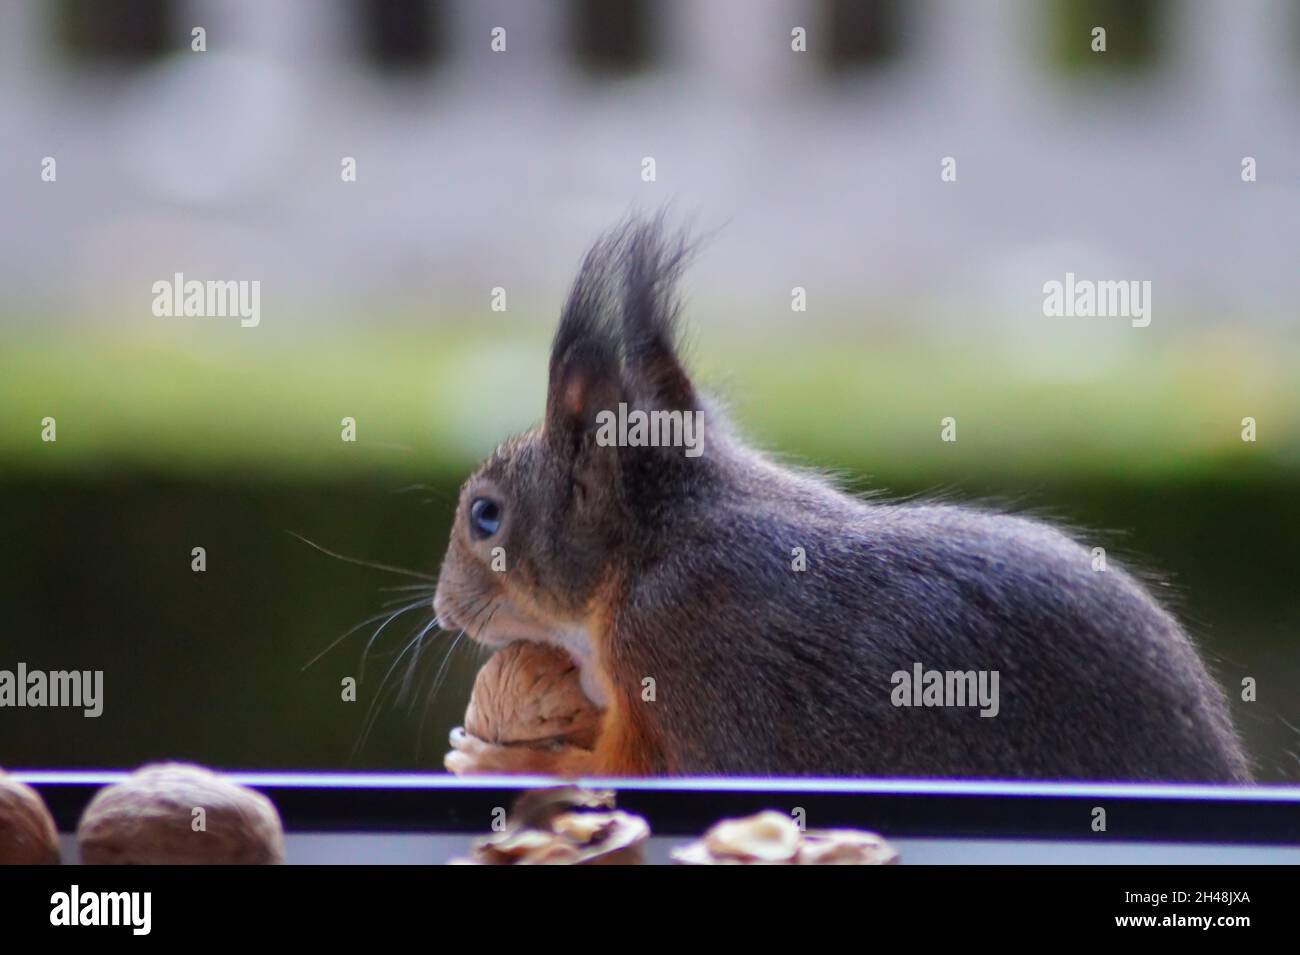 Hungriges Eichhörnchen am Fenster Banque D'Images